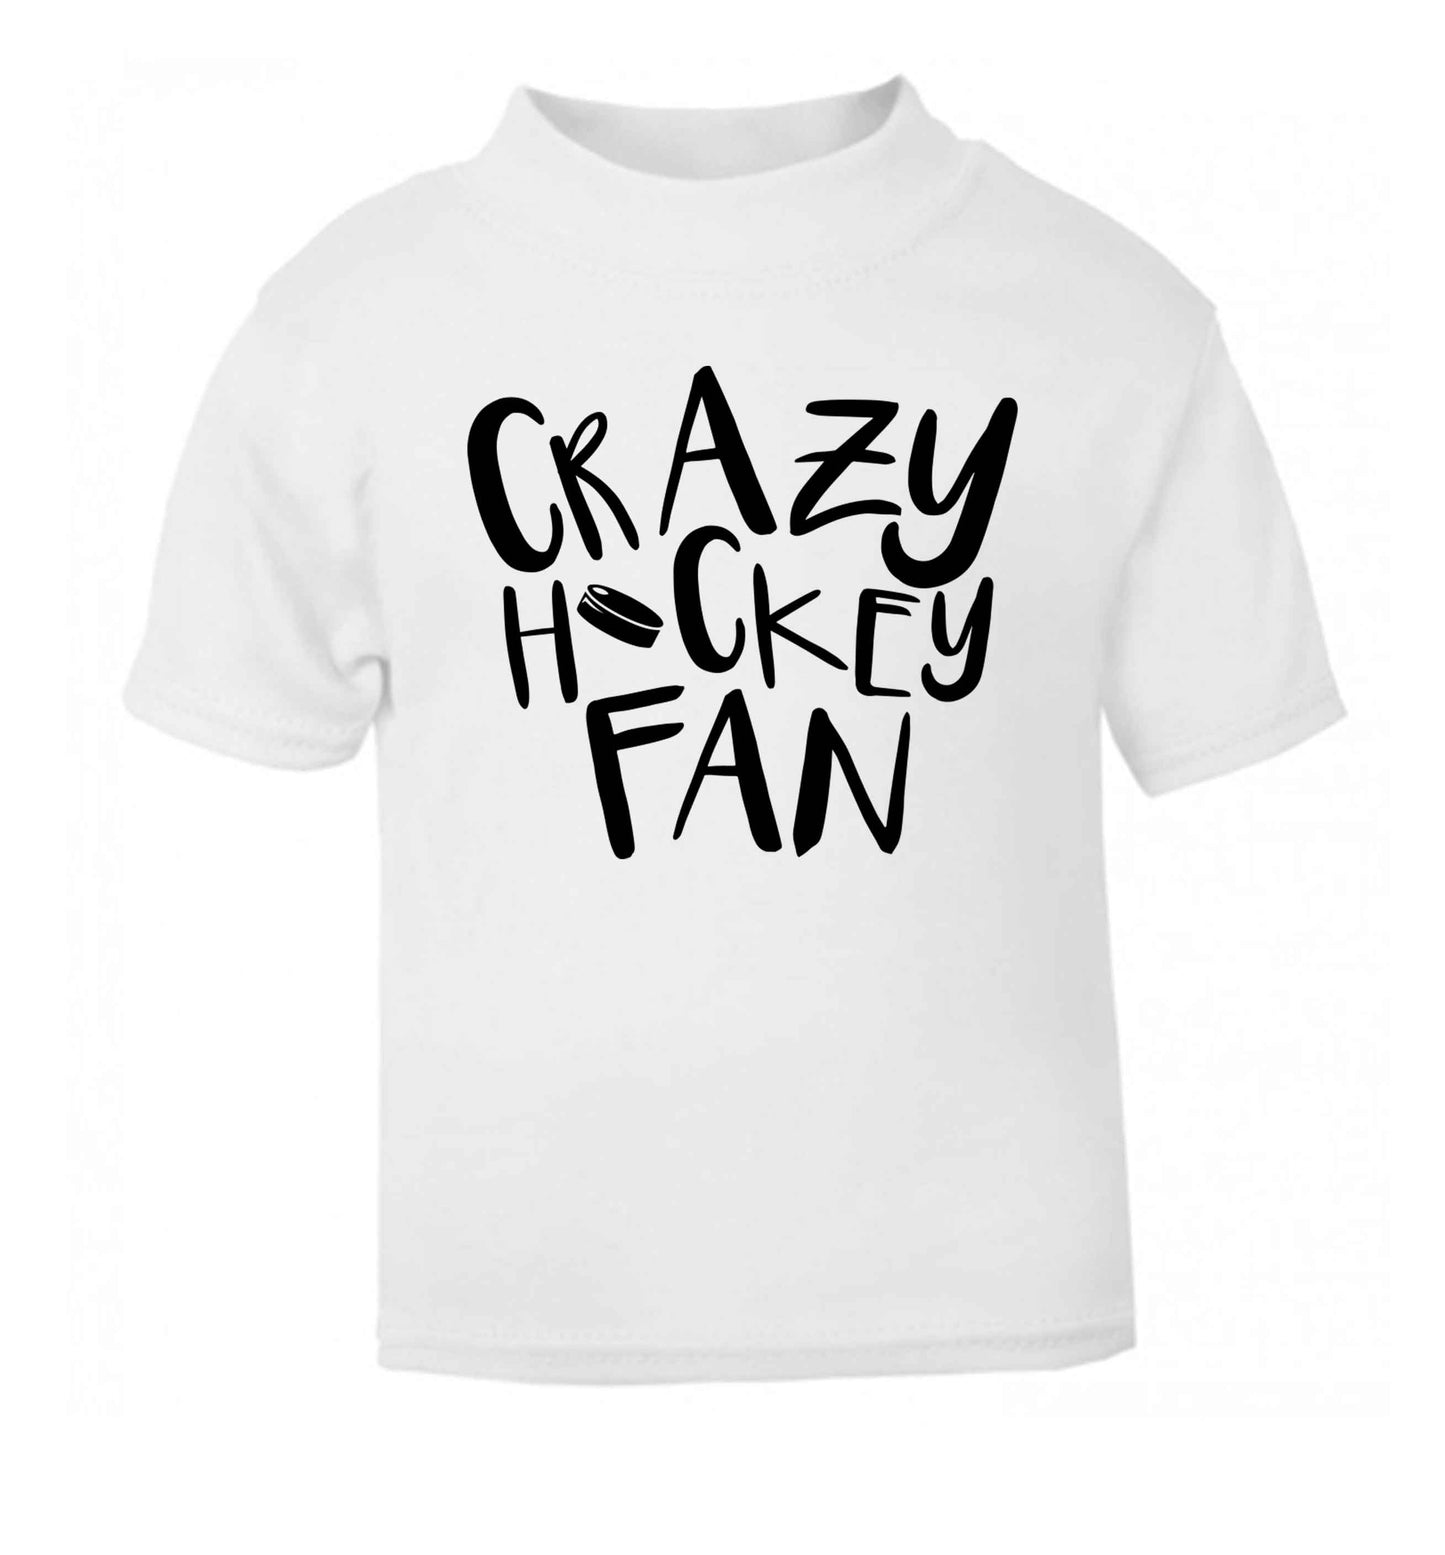 Crazy hockey fan white Baby Toddler Tshirt 2 Years